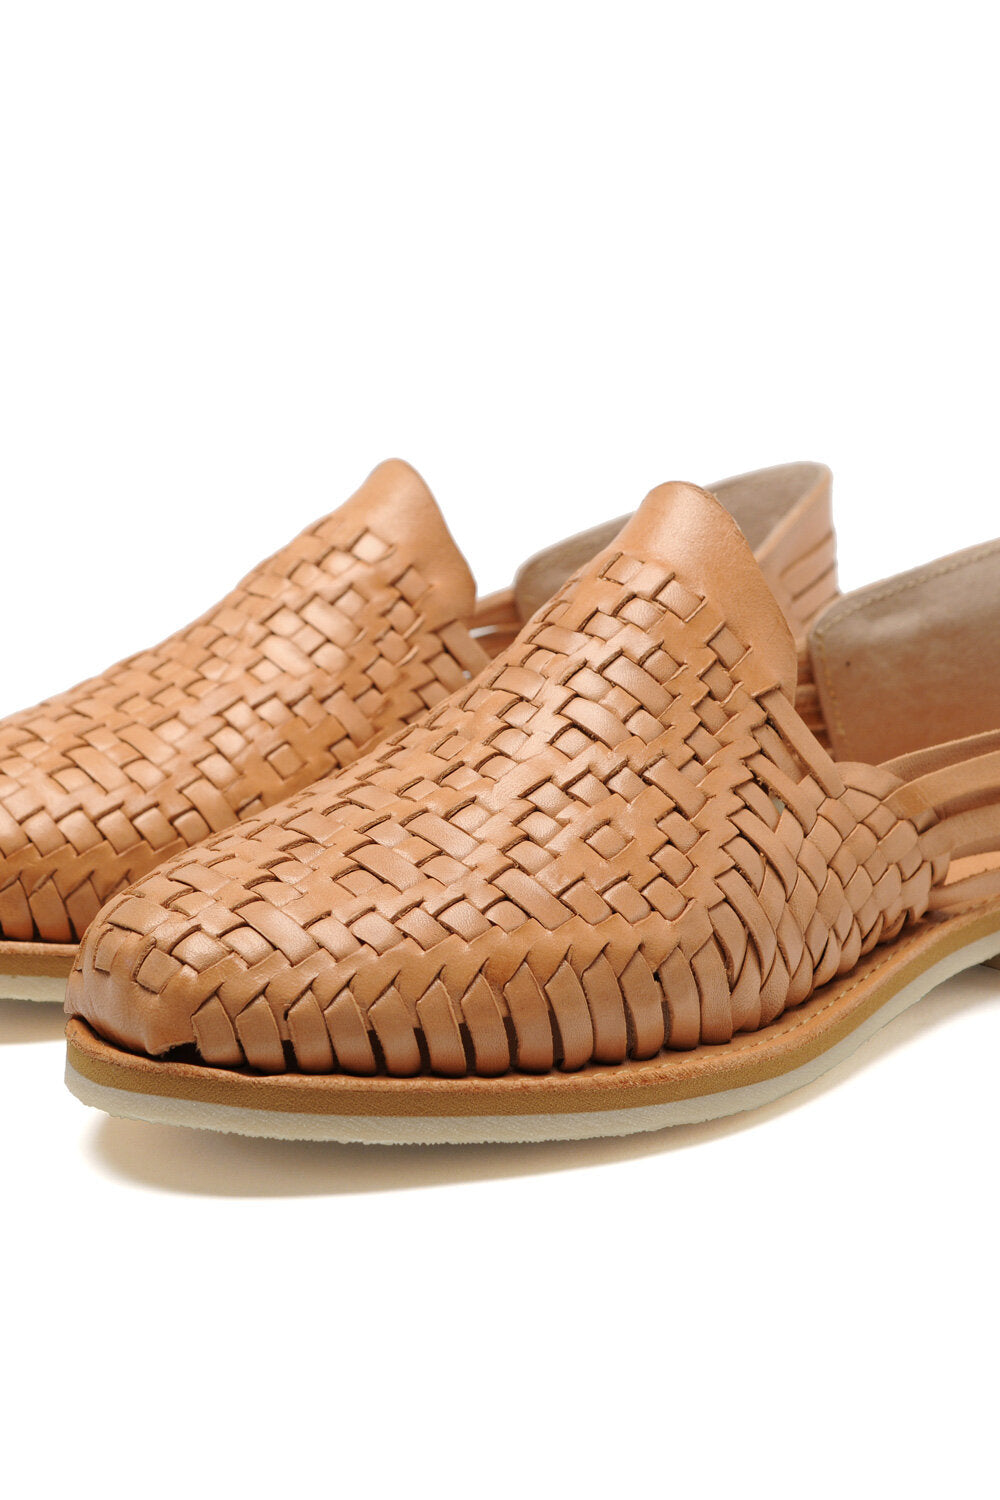 Rio Grande Leather Huarache | Slip on Vegetable Tanned Sandals | Tan 1